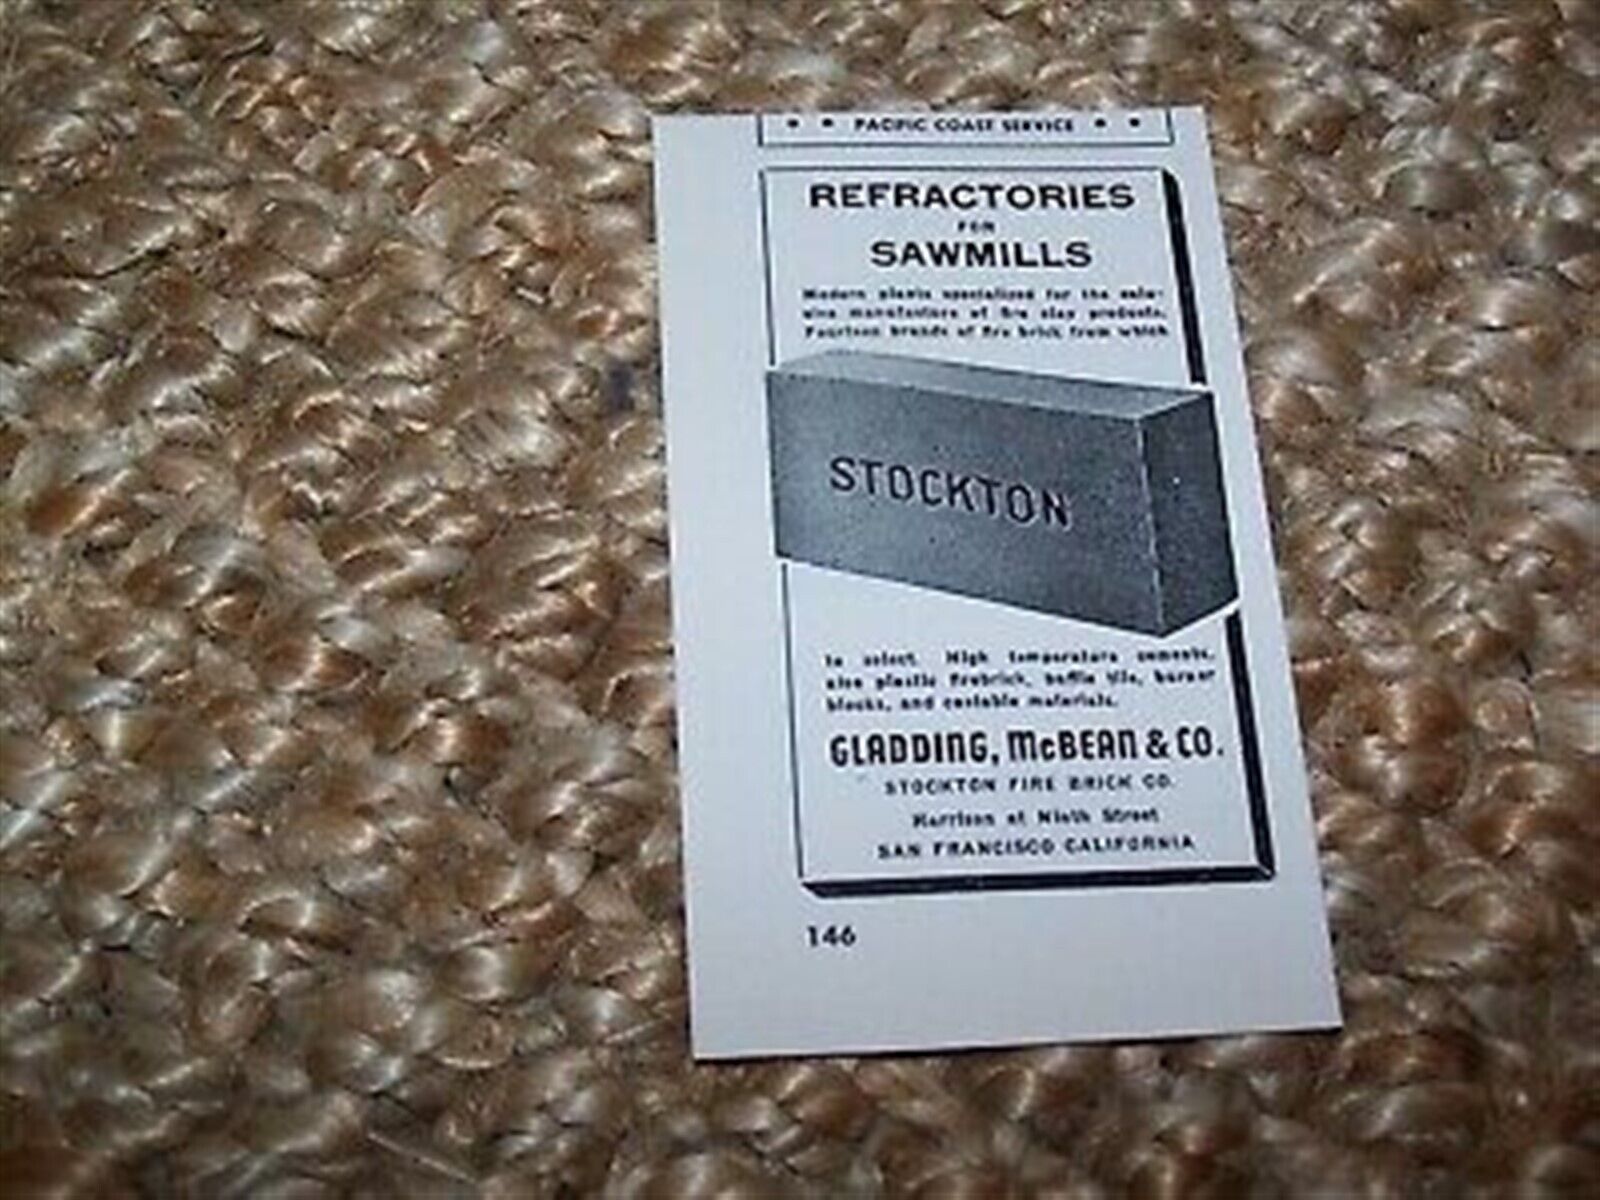 c1948 vintage print ad, Stockton Bricks, Gladding, McBean & Co. 3 X 5.5 inches